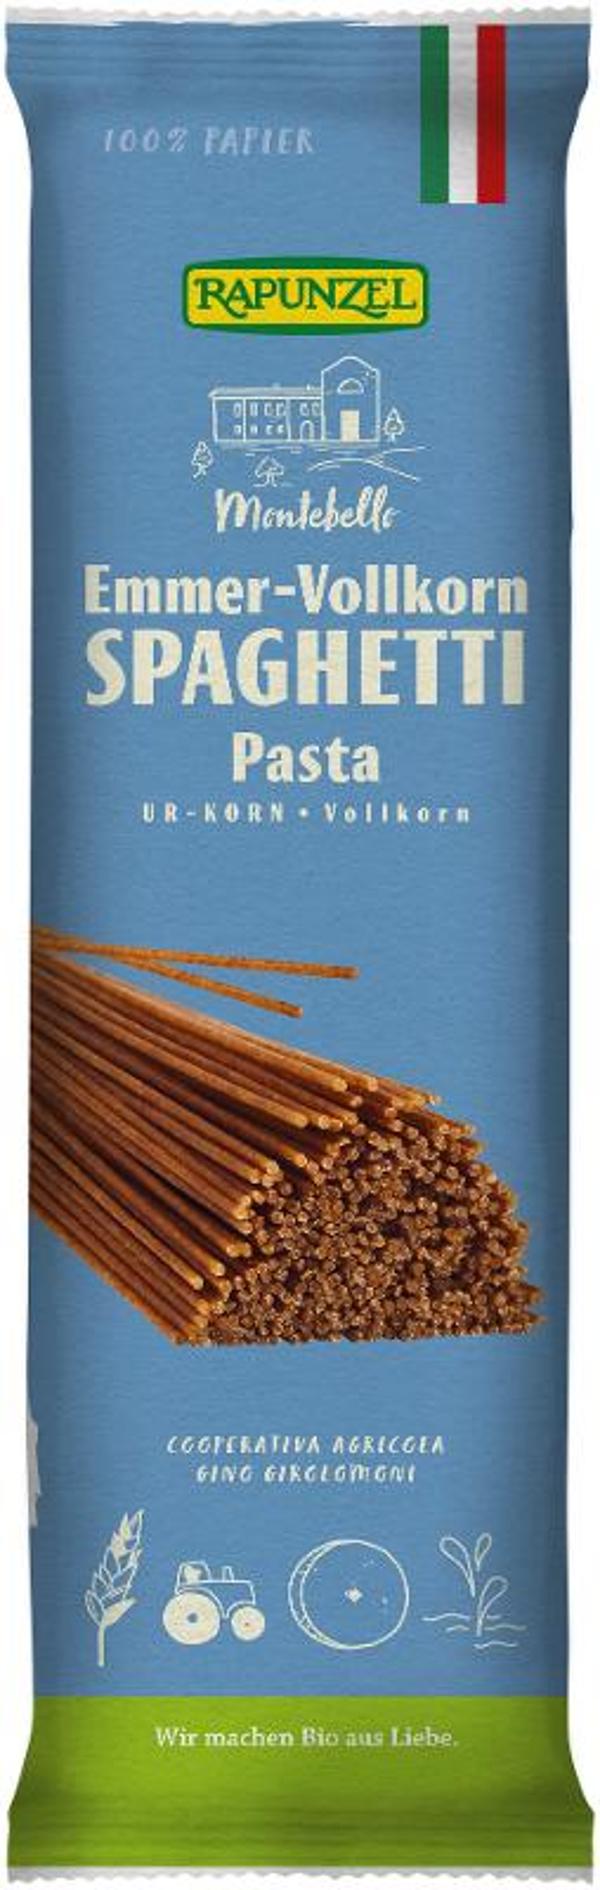 Produktfoto zu Emmer Spaghetti Vollkorn, 500g